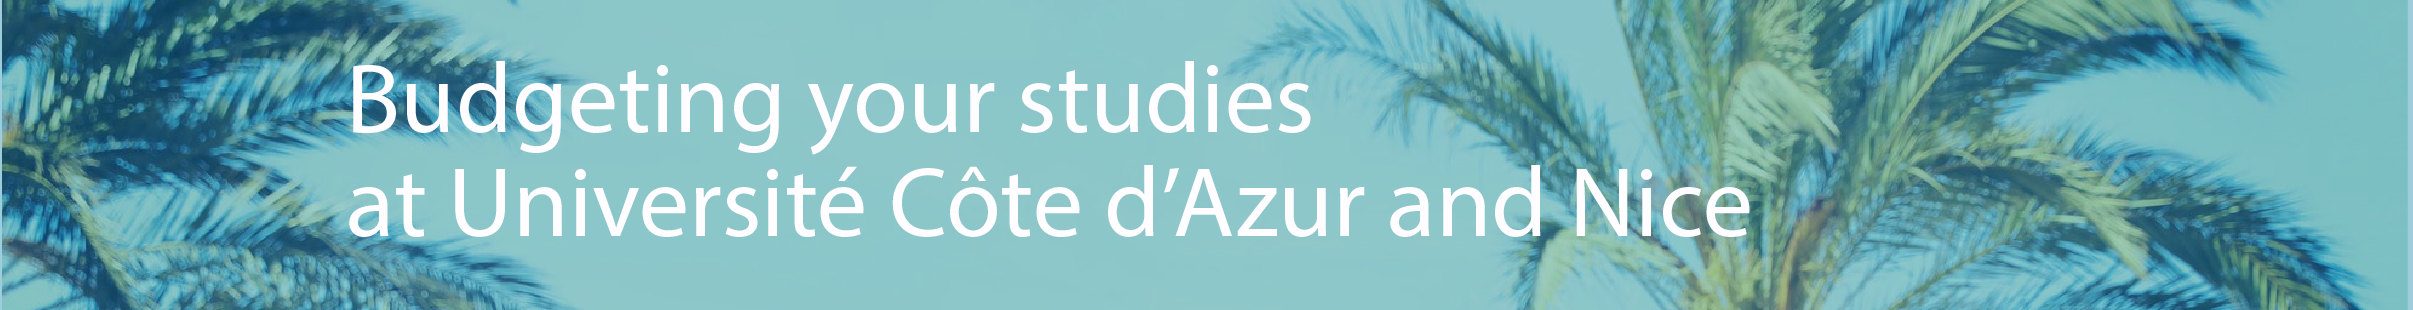 Budgeting your studies at Université Cote d'Azur and Nice